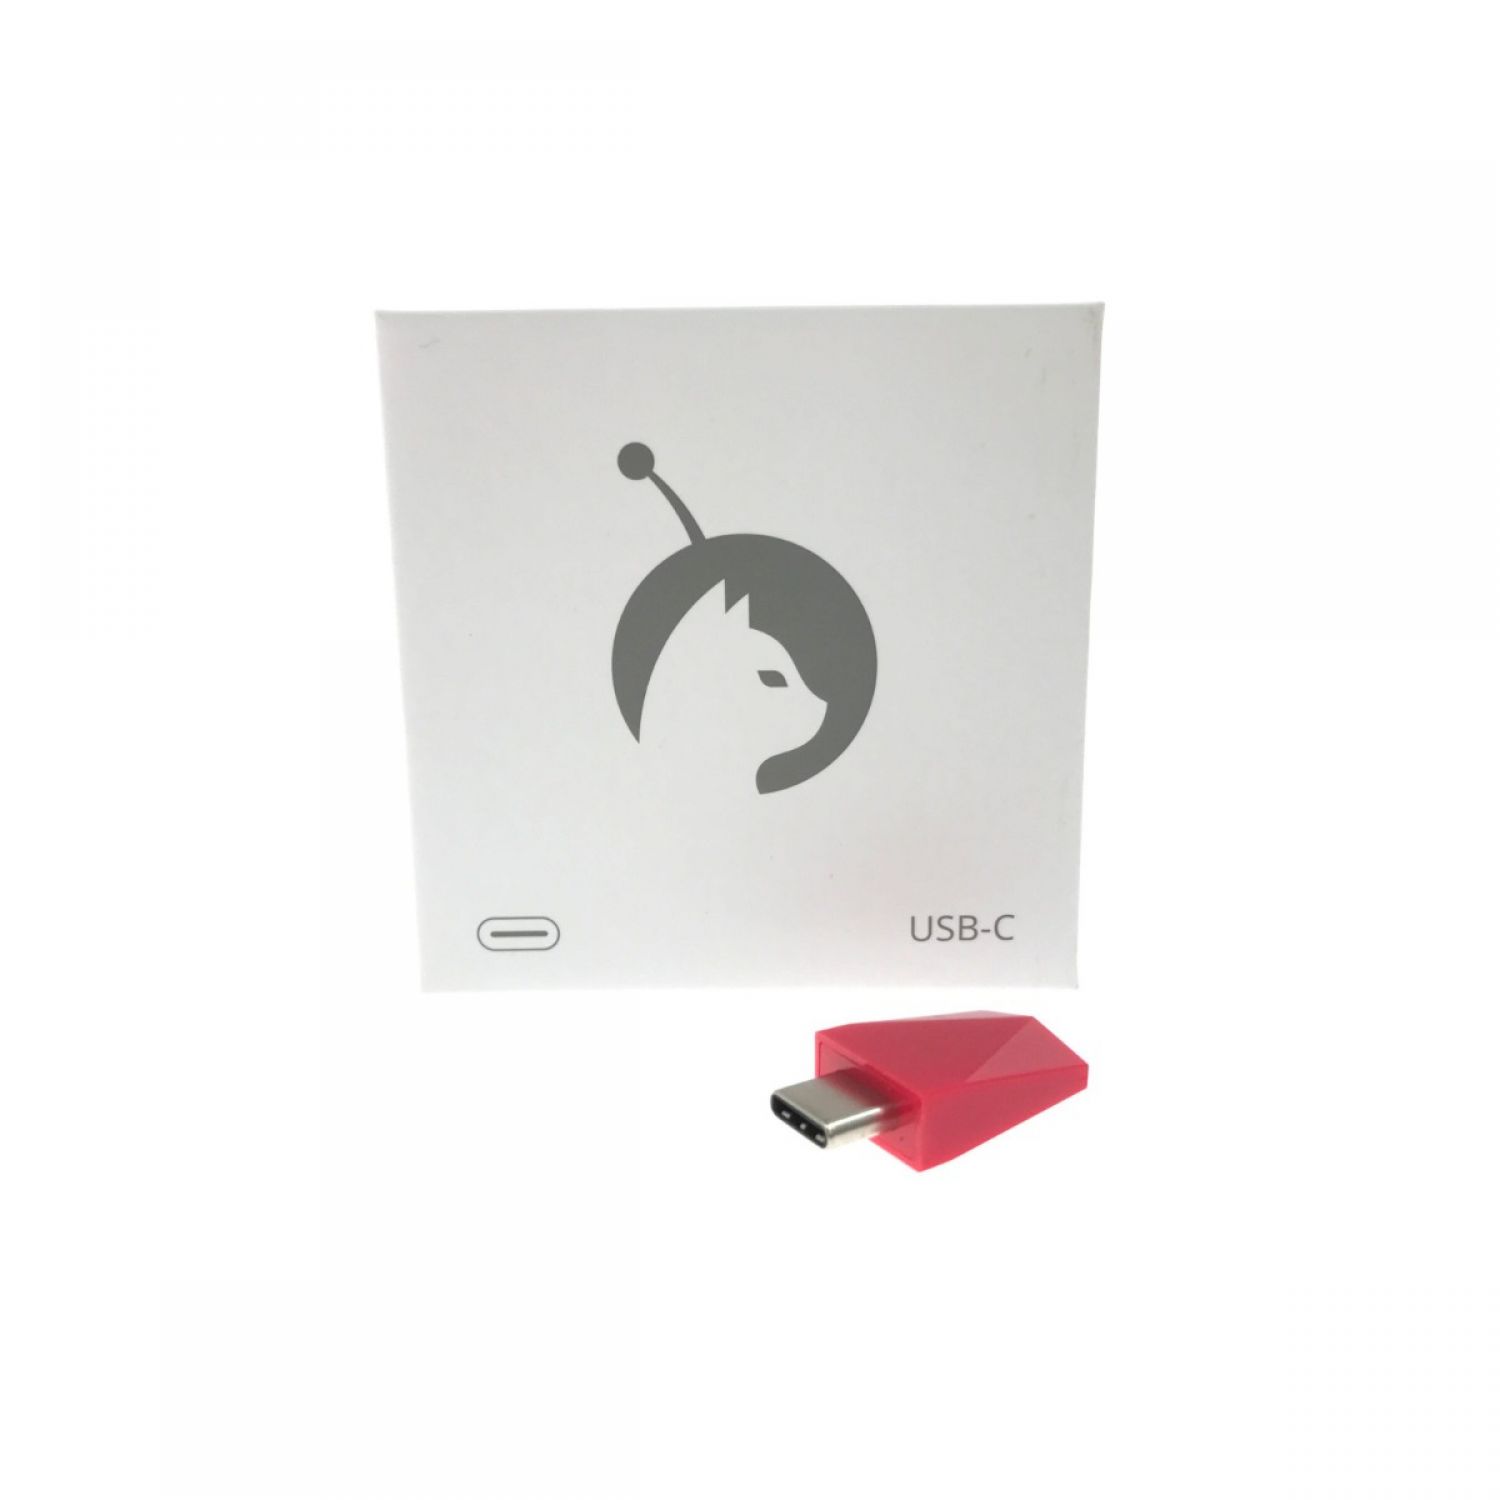 LUNA DISPLAY USB-C